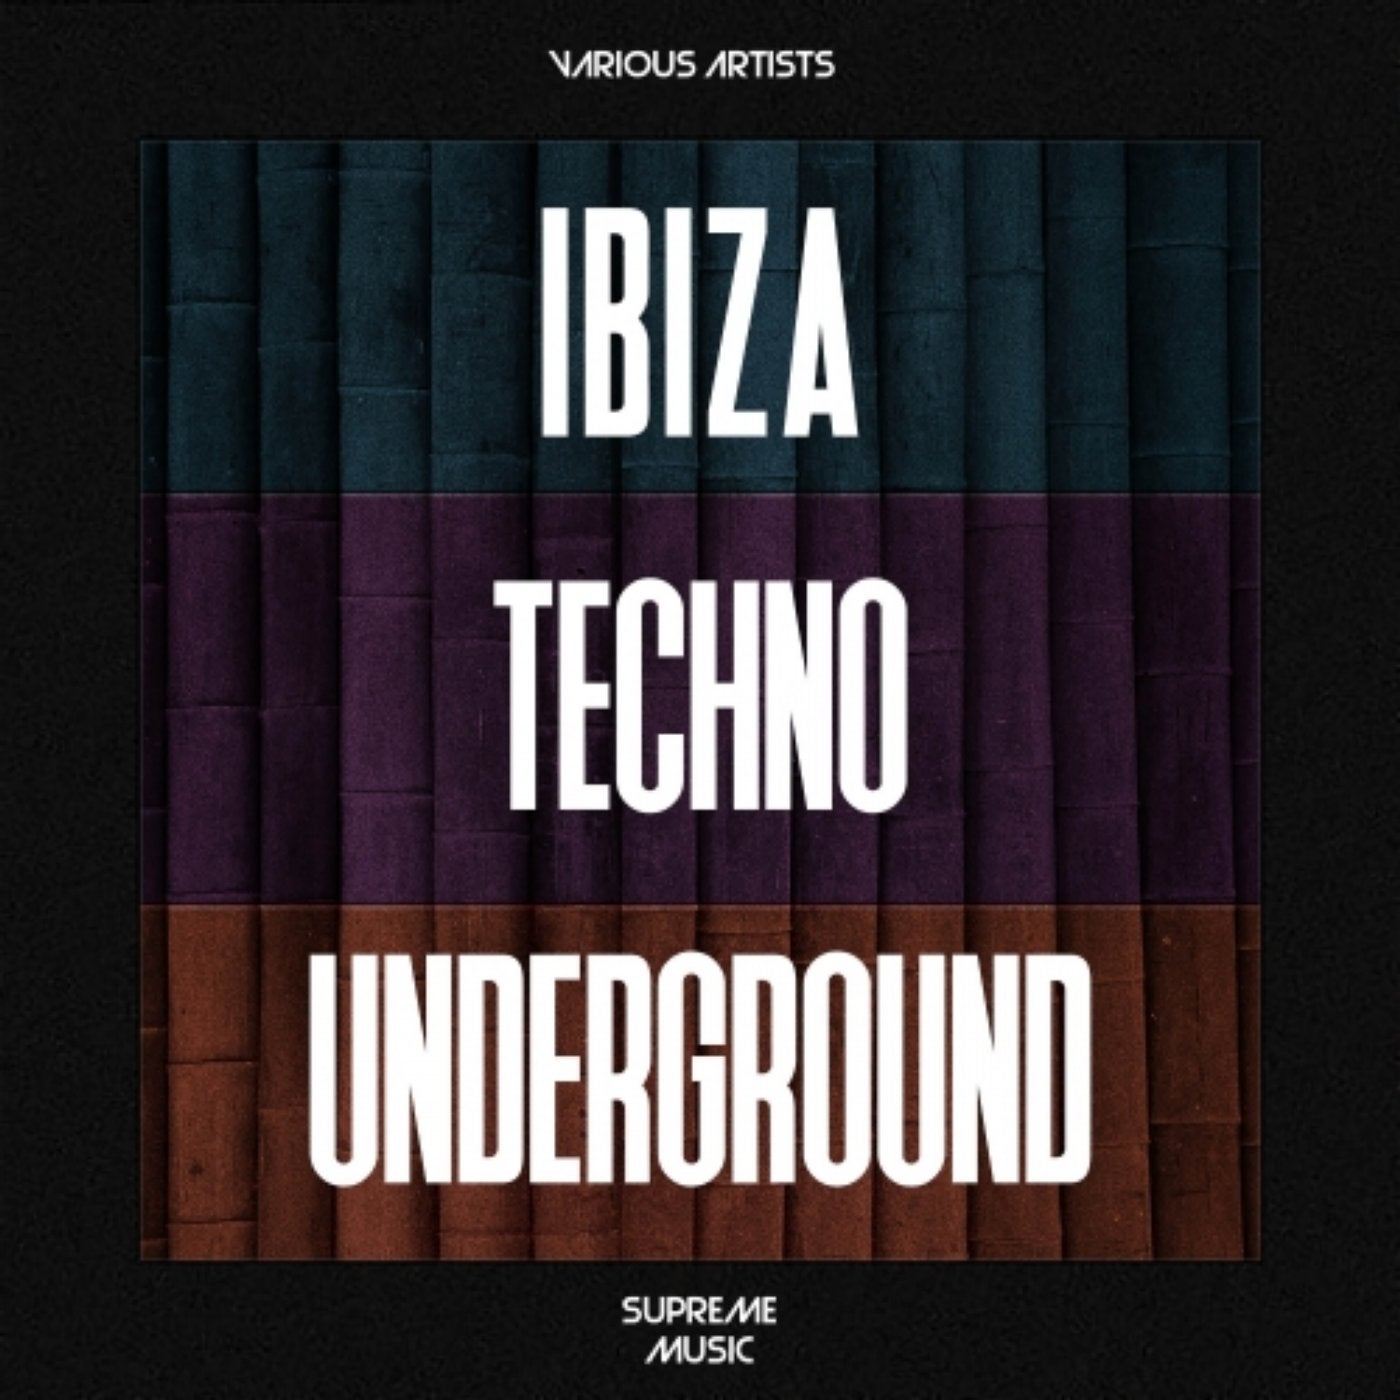 Ibiza Techno Underground